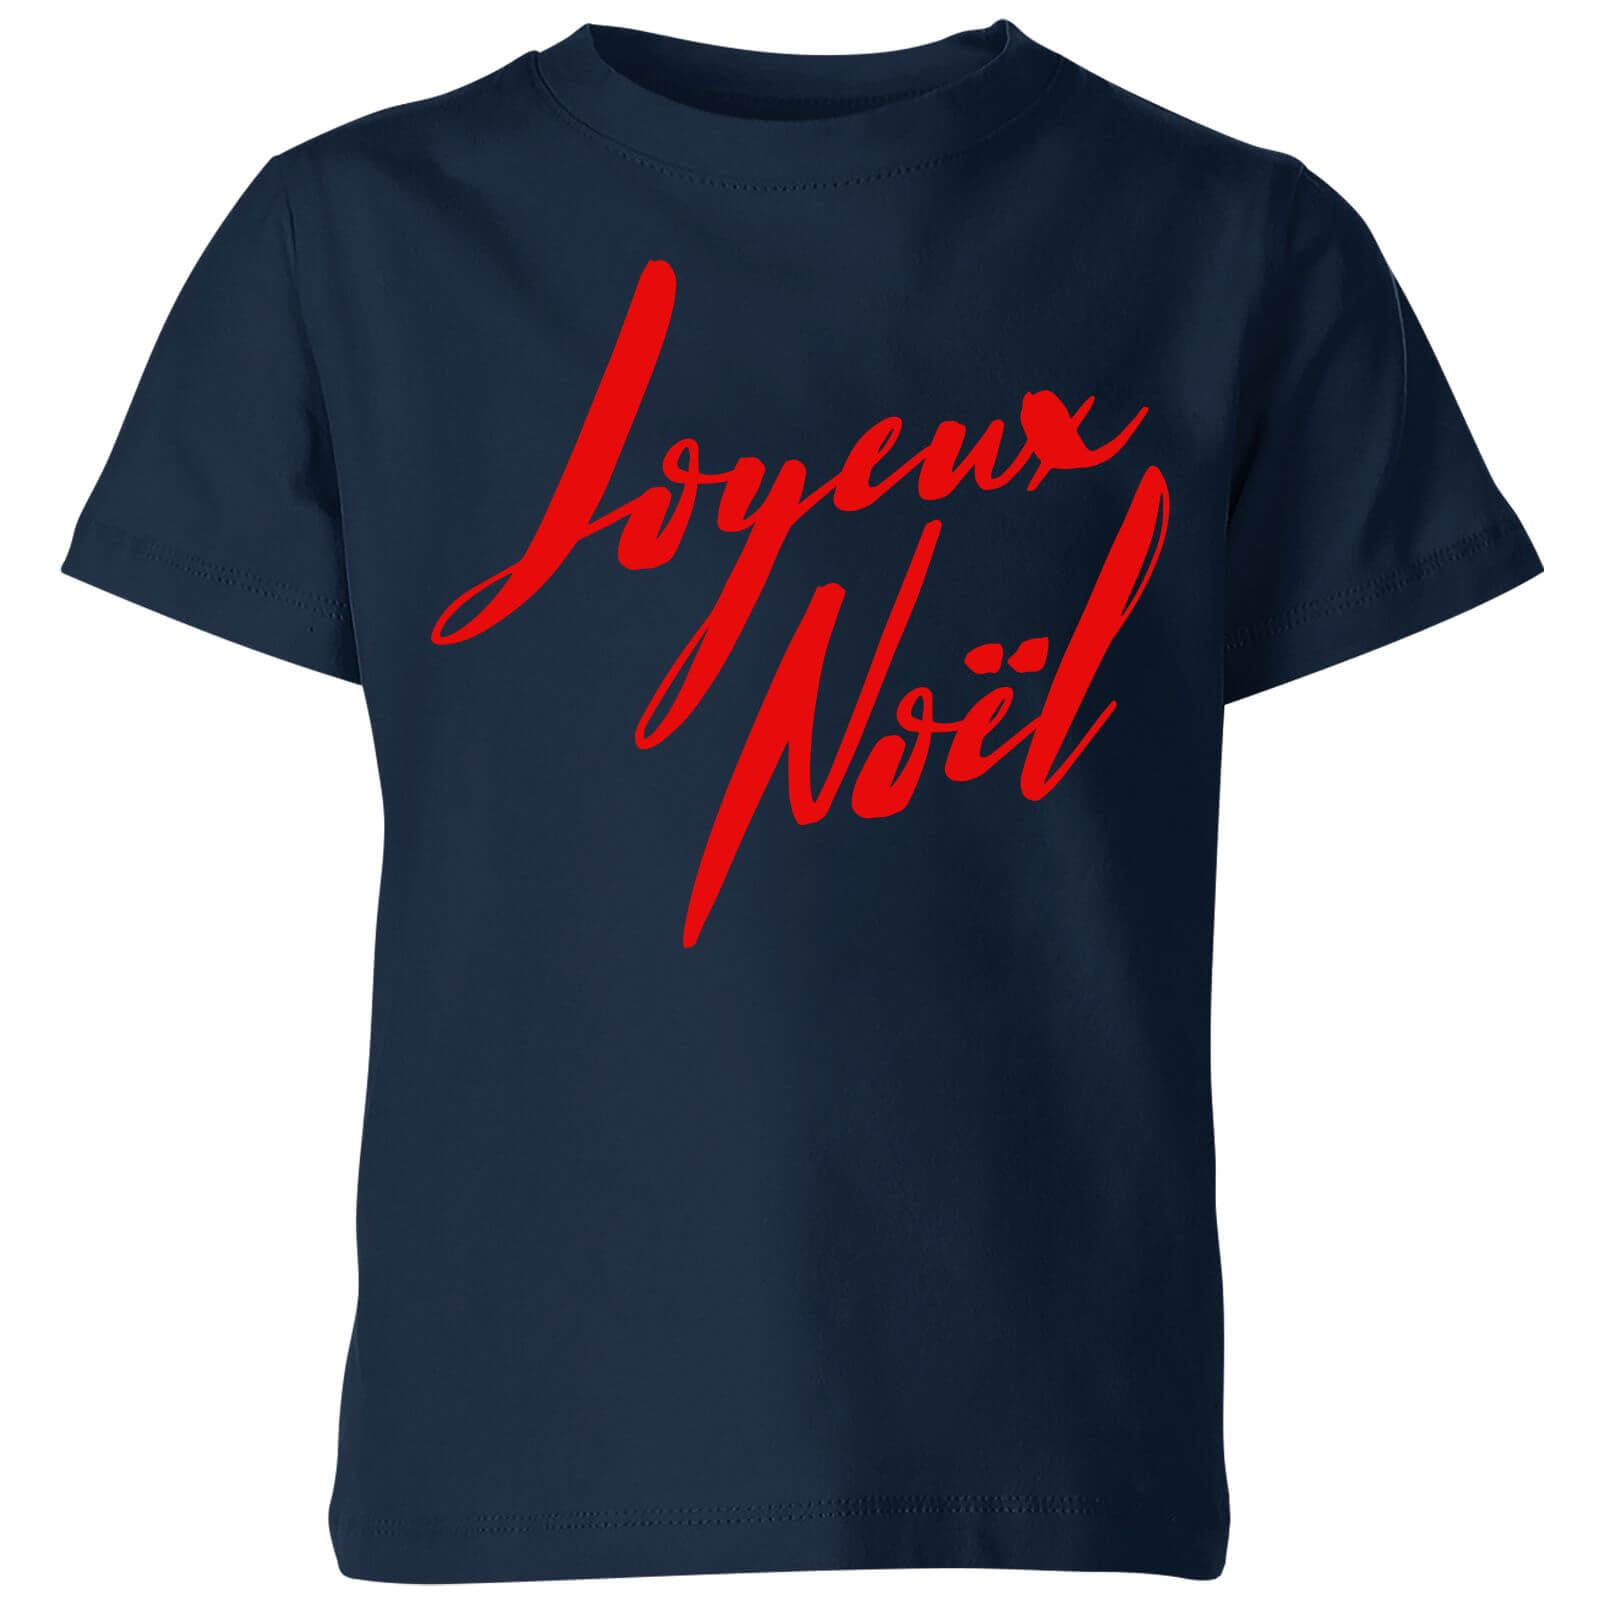 Joyeux Noel Holly Jolly international Kids' T-Shirt - Navy - 3-4 Years - Navy